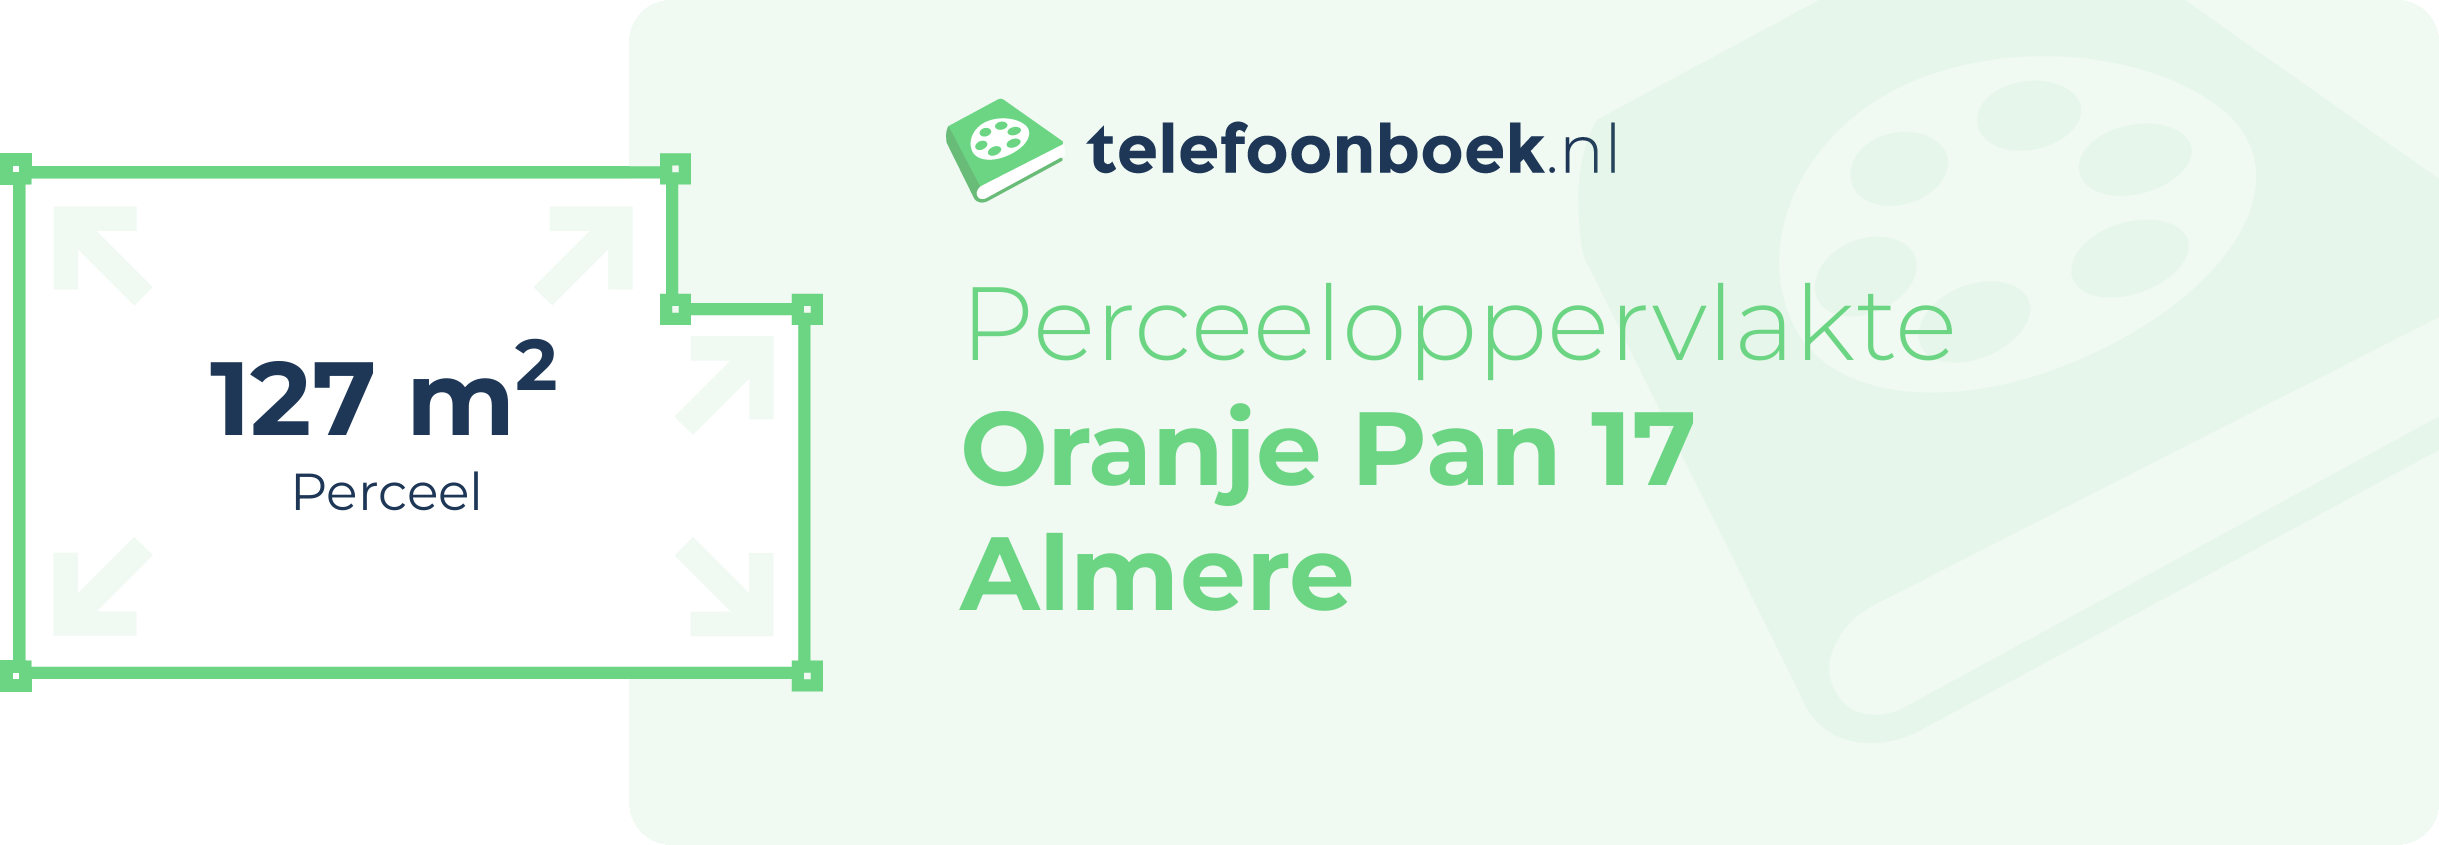 Perceeloppervlakte Oranje Pan 17 Almere